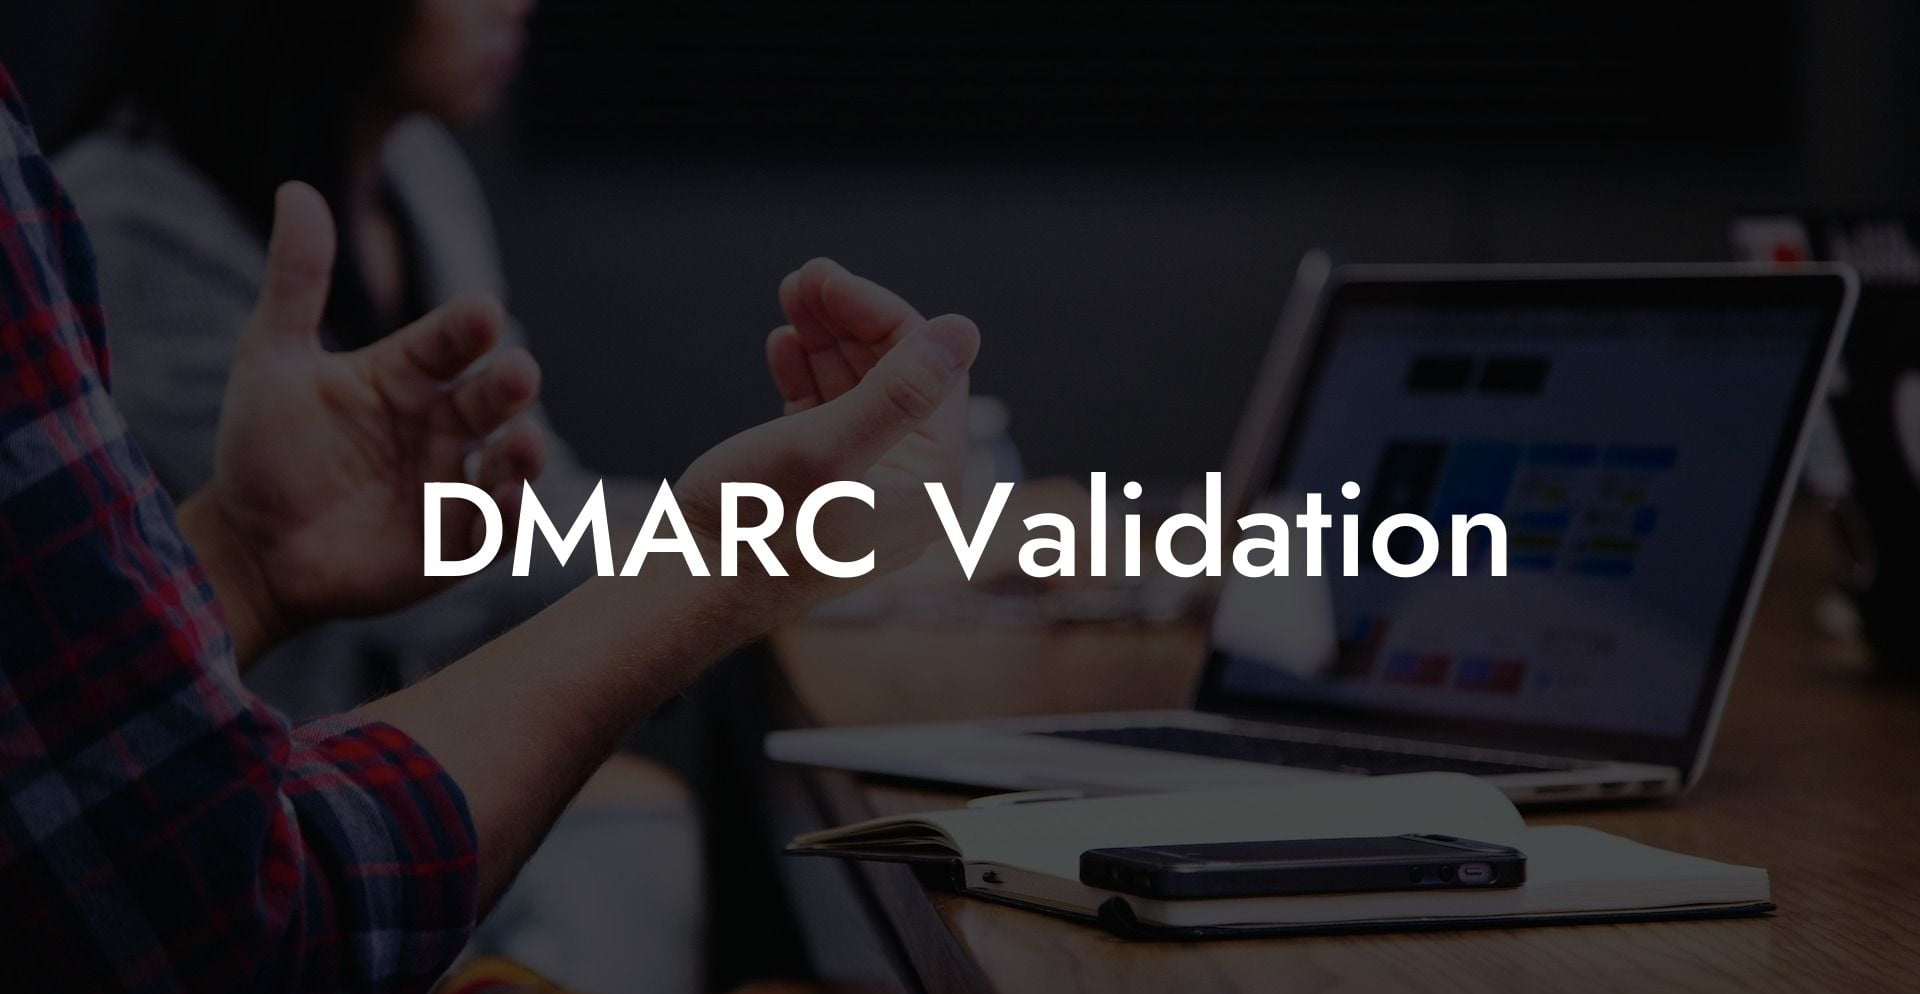 DMARC Validation